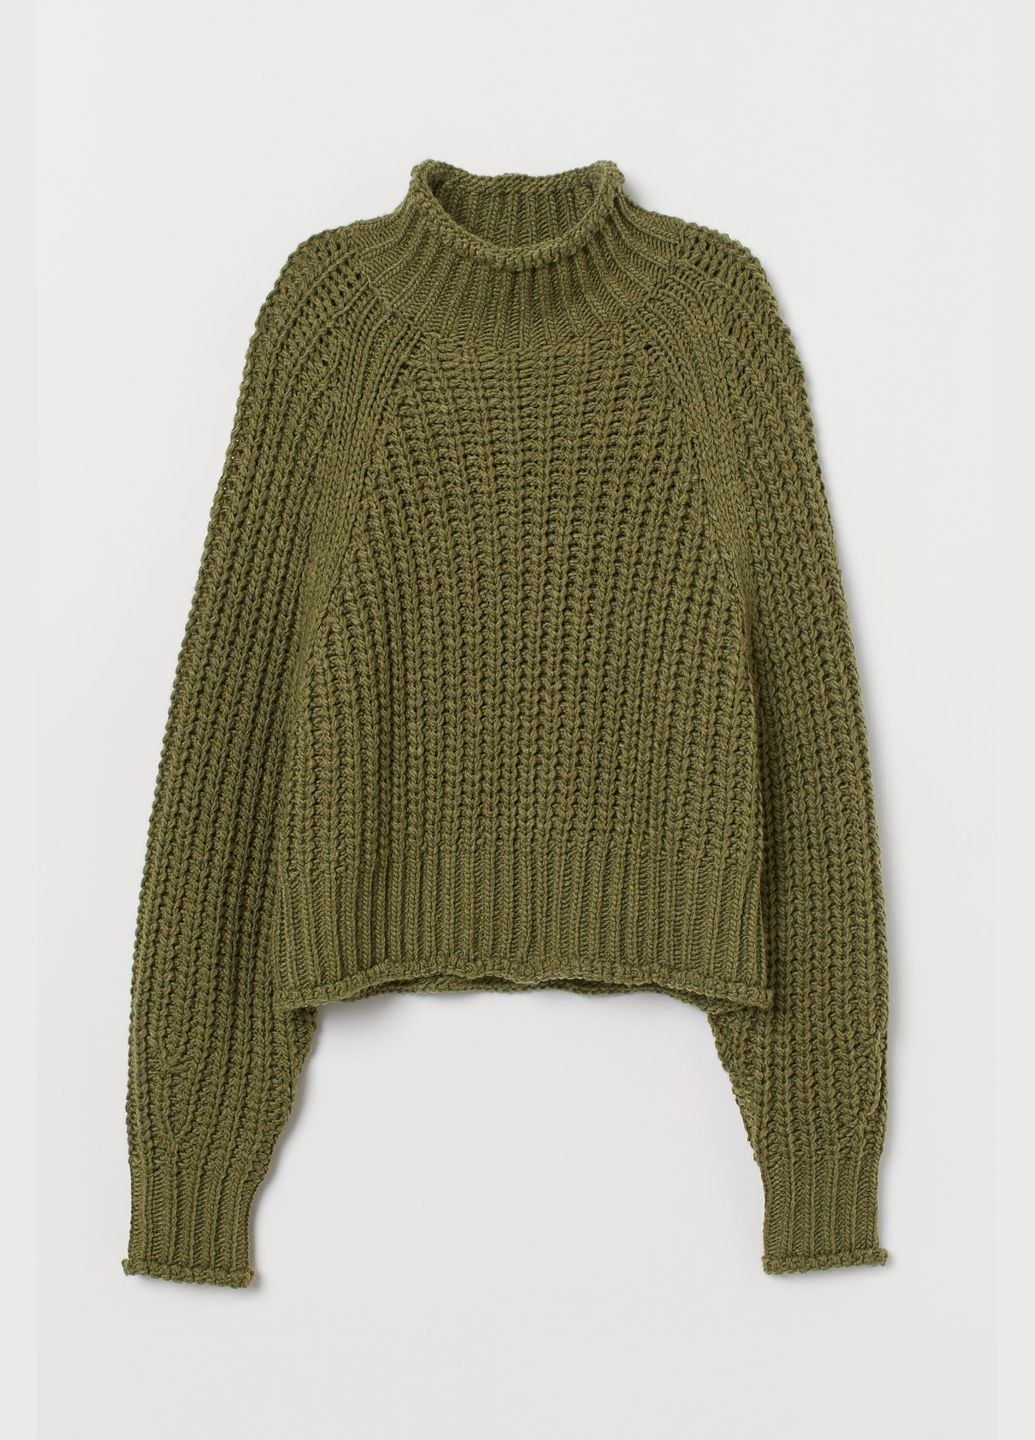 Оливковый (хаки) зимний свитер оверсайз H&M